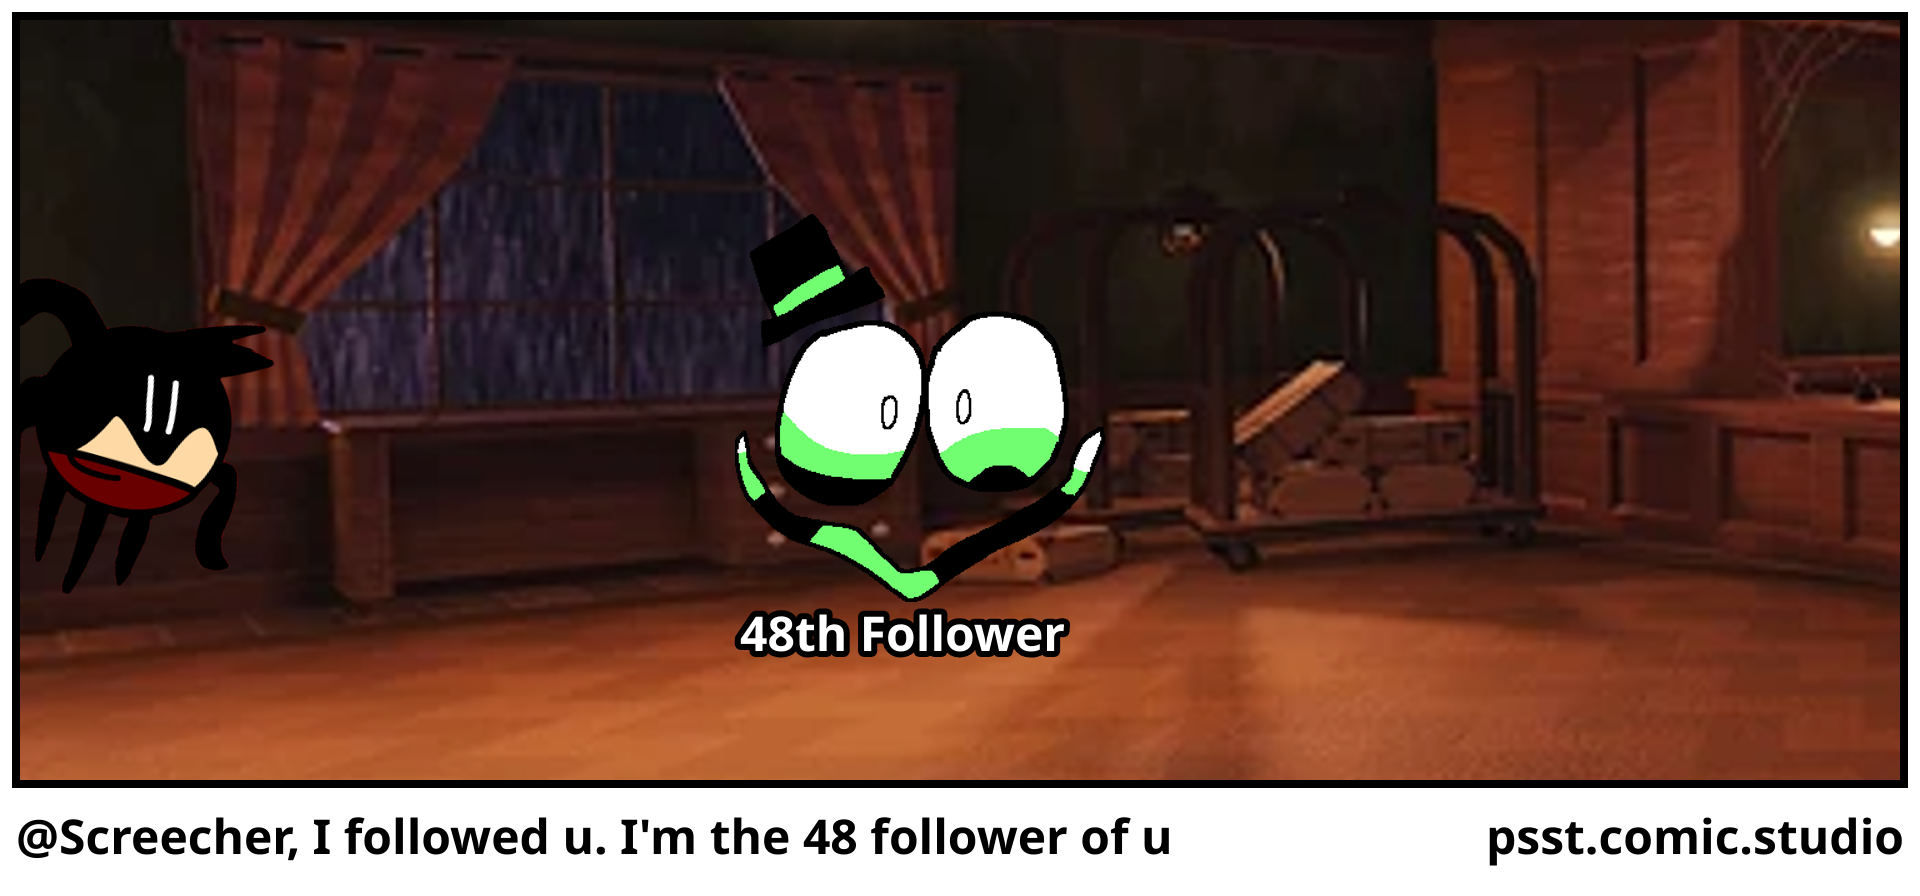 @Screecher, I followed u. I'm the 48 follower of u